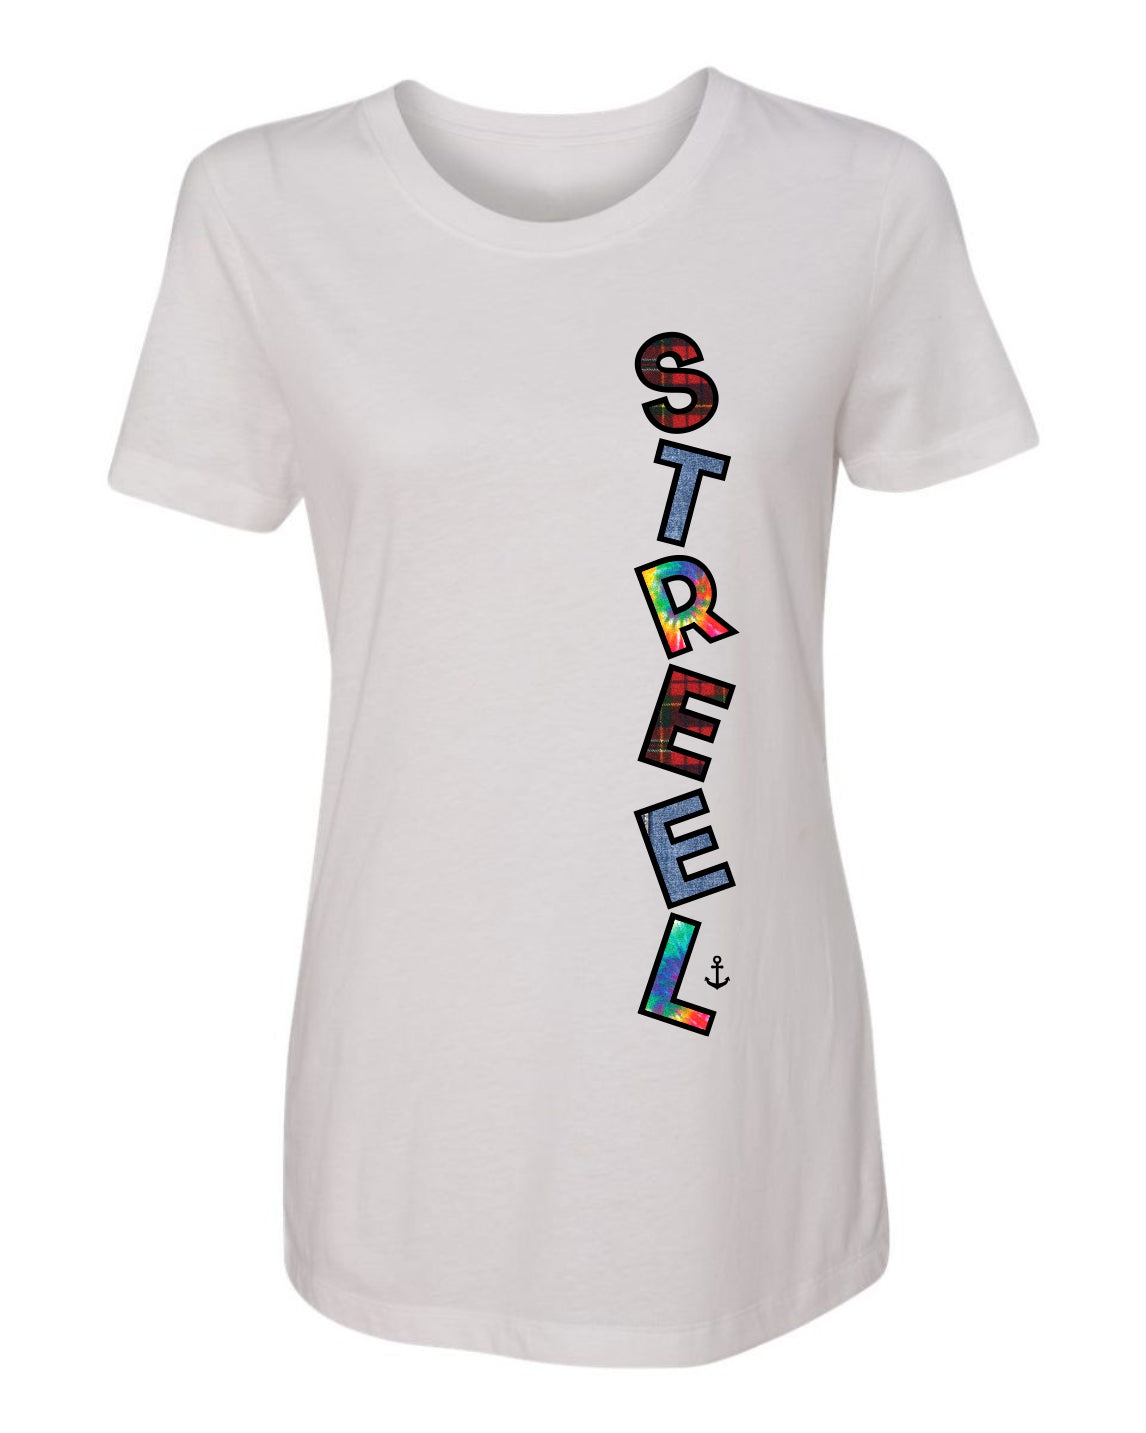 "Streel" Patterns T-Shirt